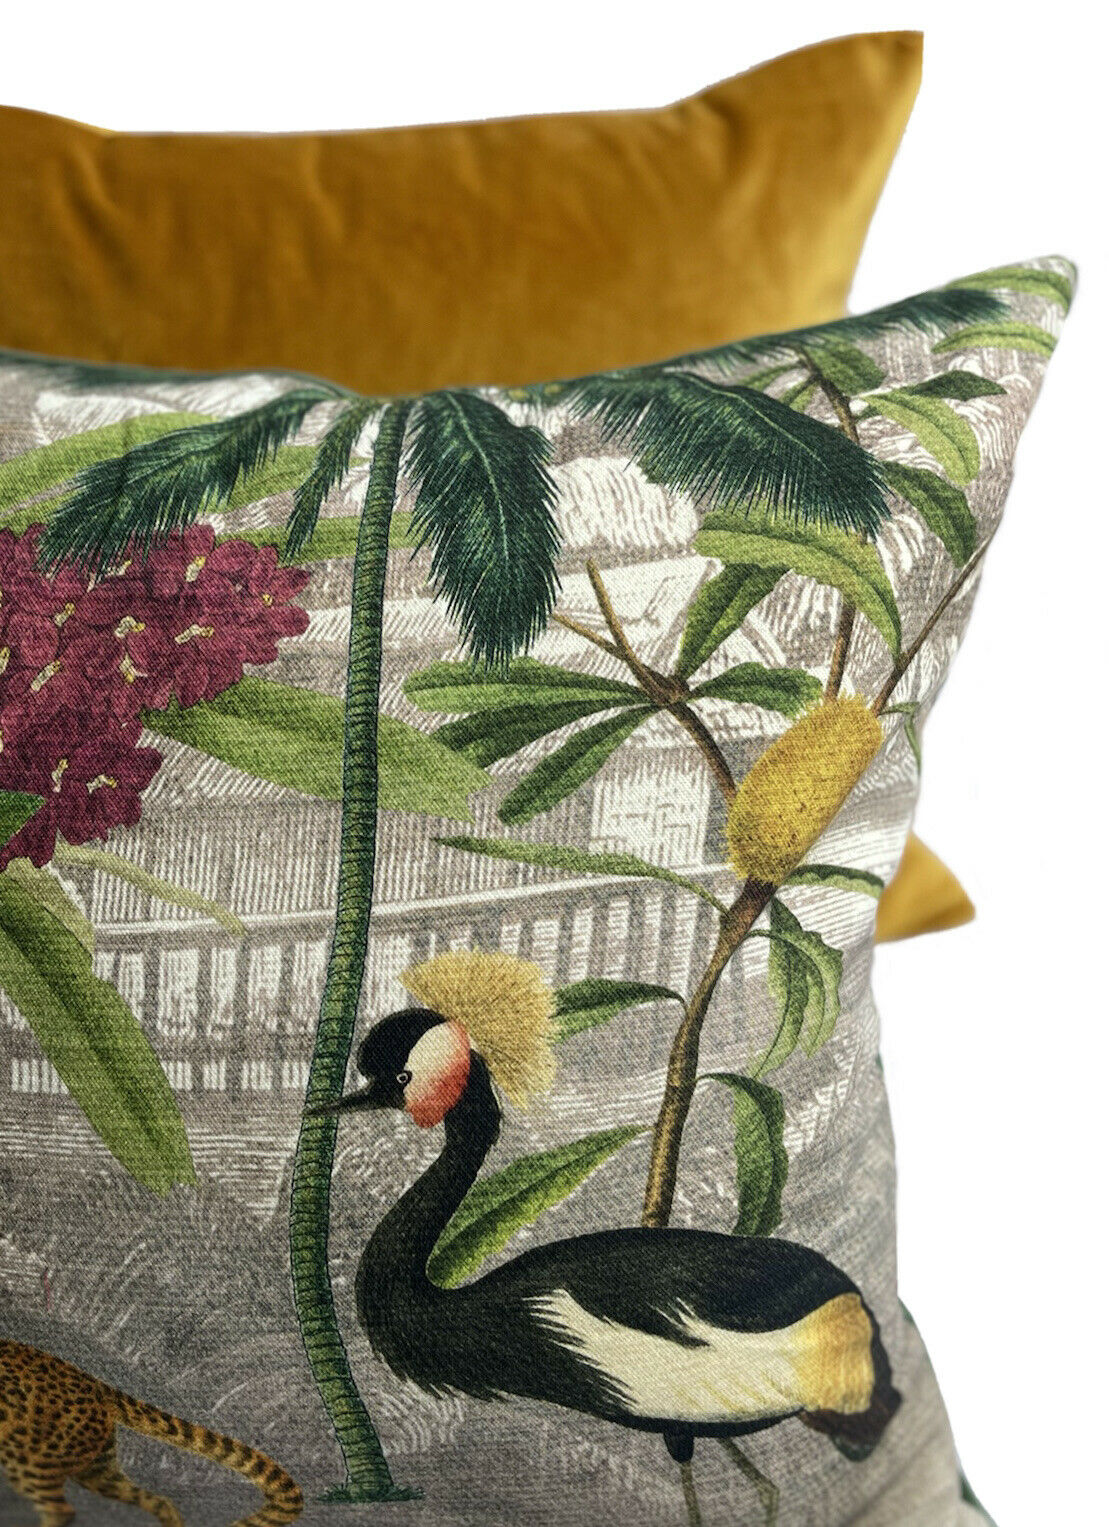 Jungle Animals Decorative Throw Pillow Case Animal Cushion Cover Botanical Sofa Decor